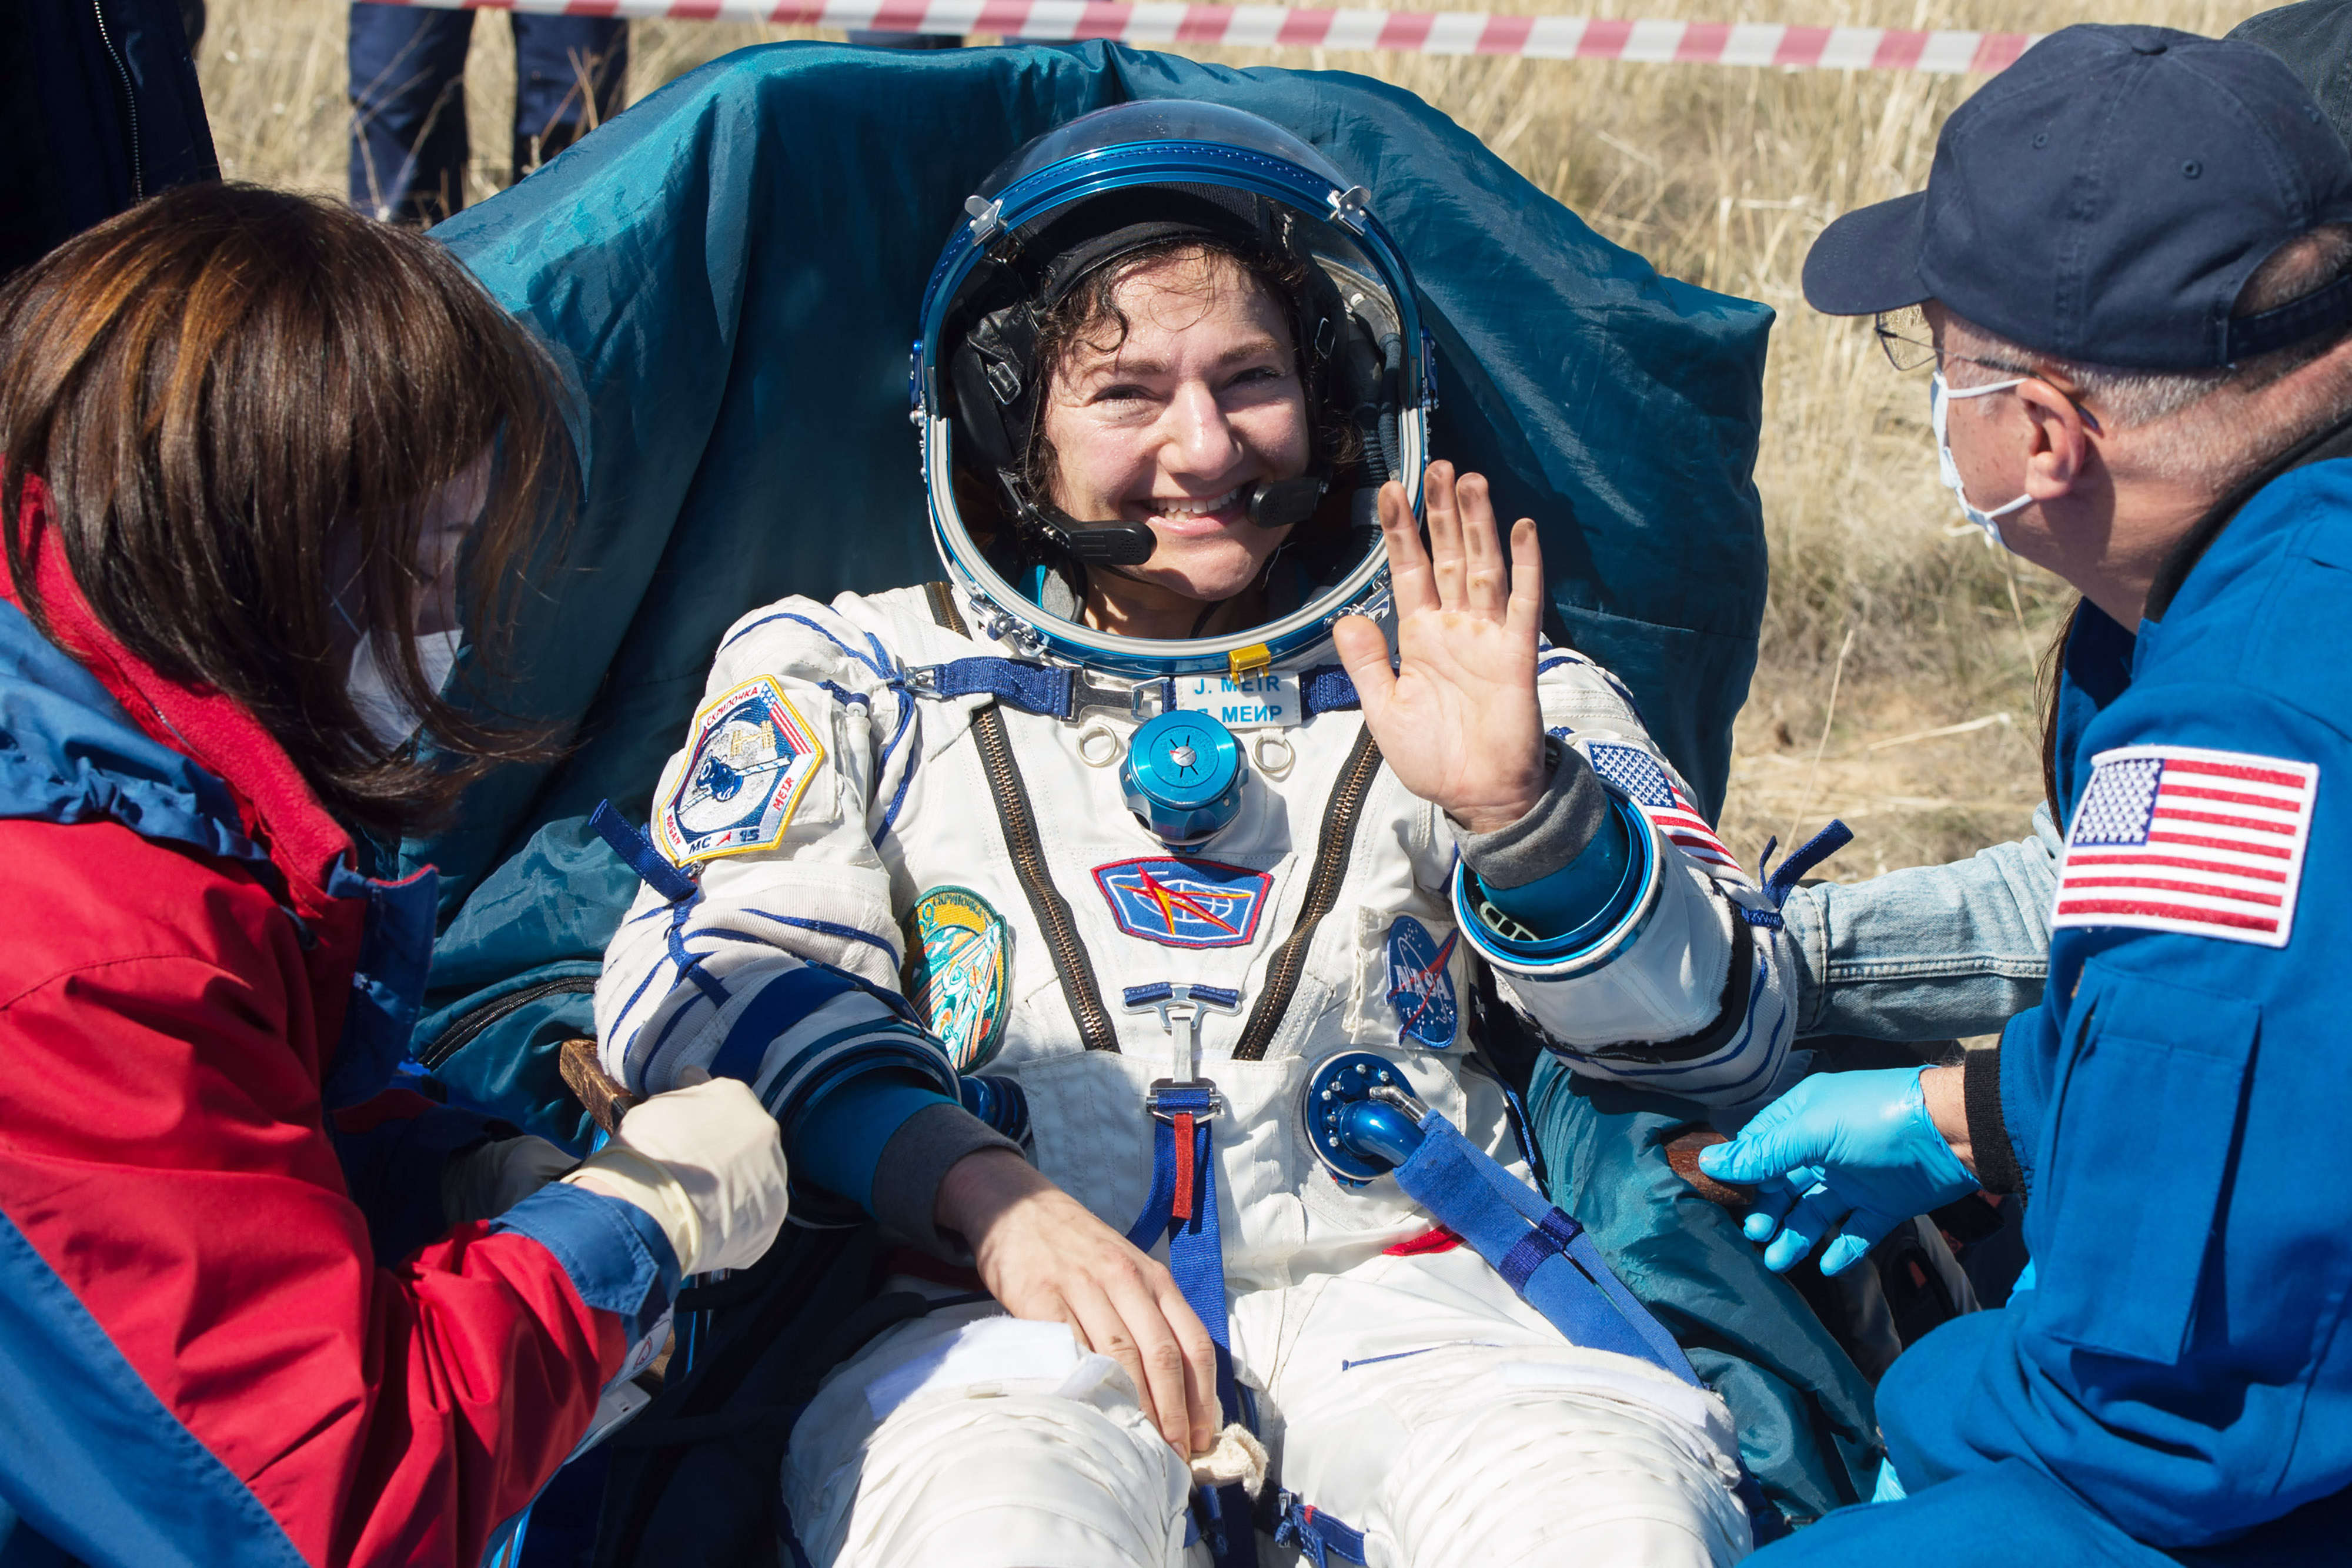 NASA astronaut Jessica Meir